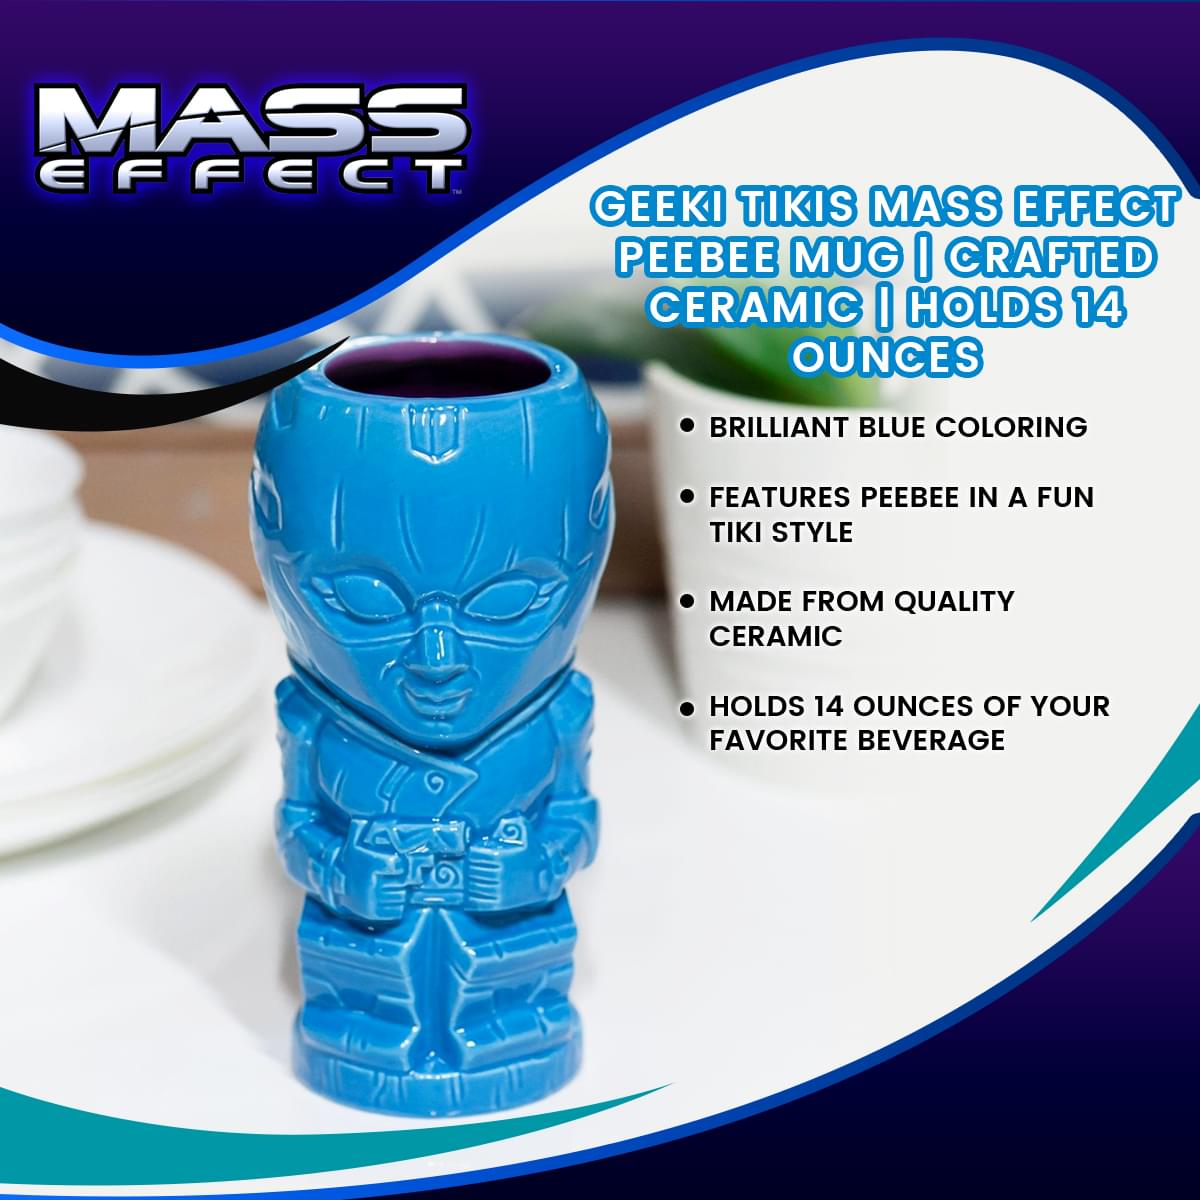 Geeki Tikis Mass Effect Peebee Mug | Crafted Ceramic | Holds 14 Ounces